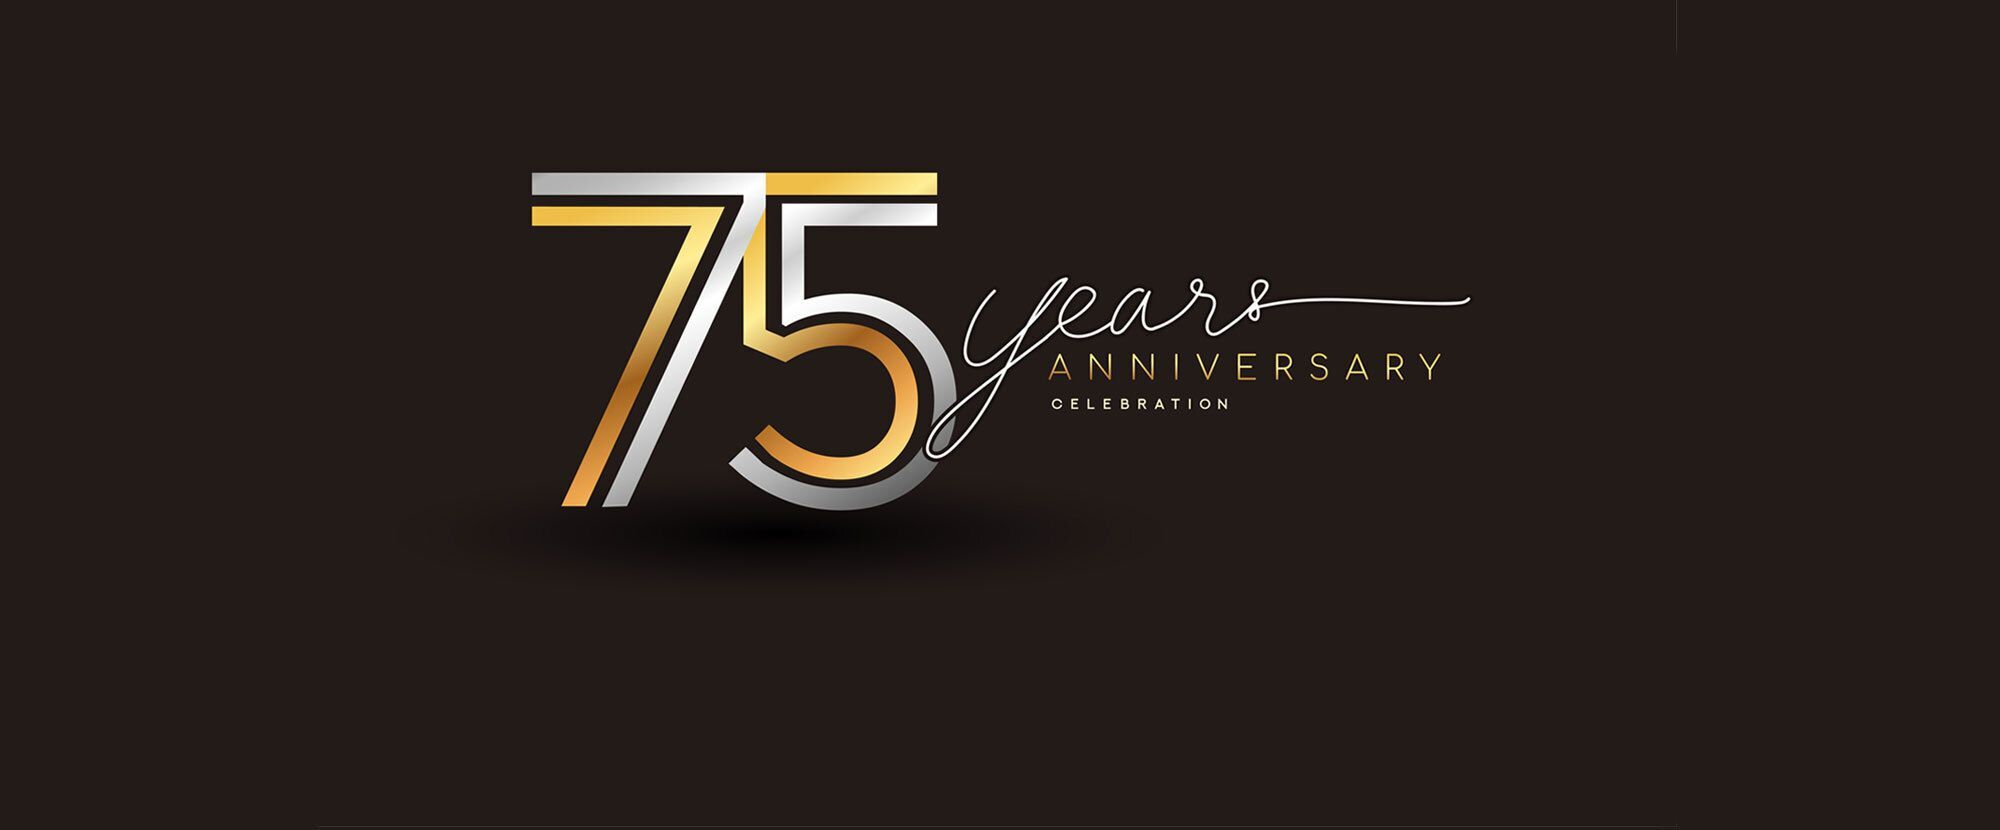 IFYE 75th Anniversary Celebration